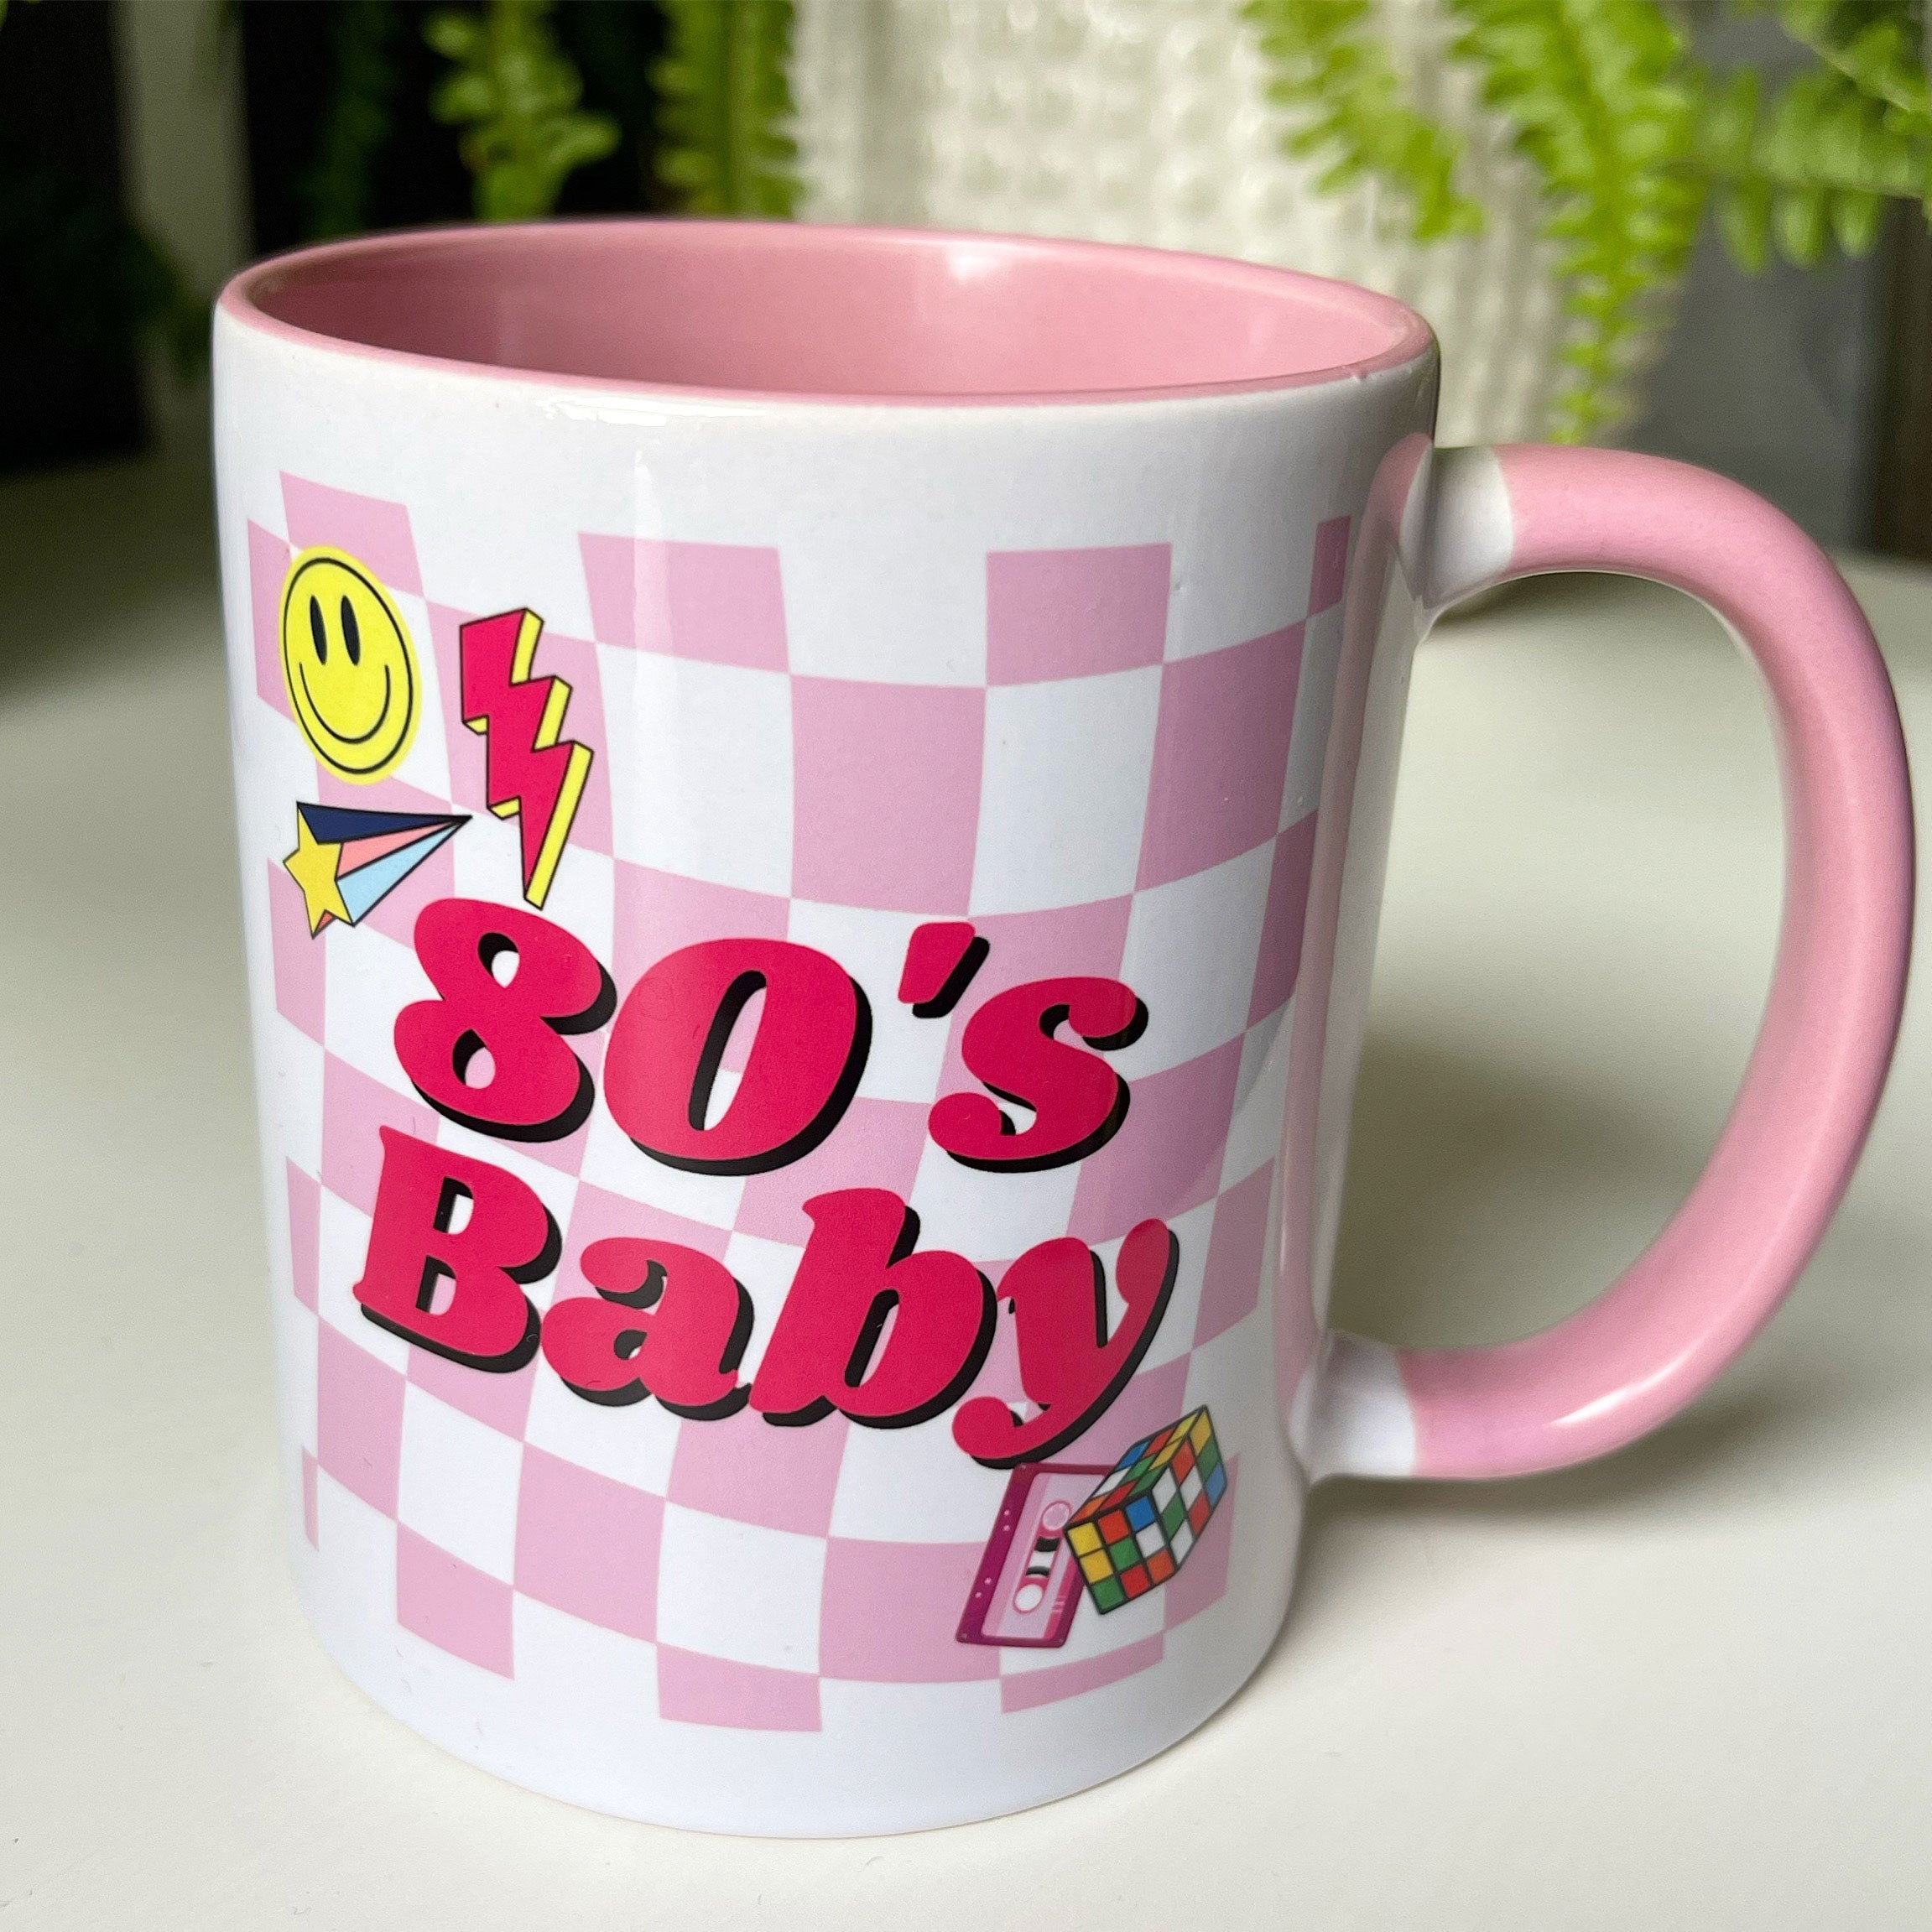 80's Baby Decade Birthday Mug